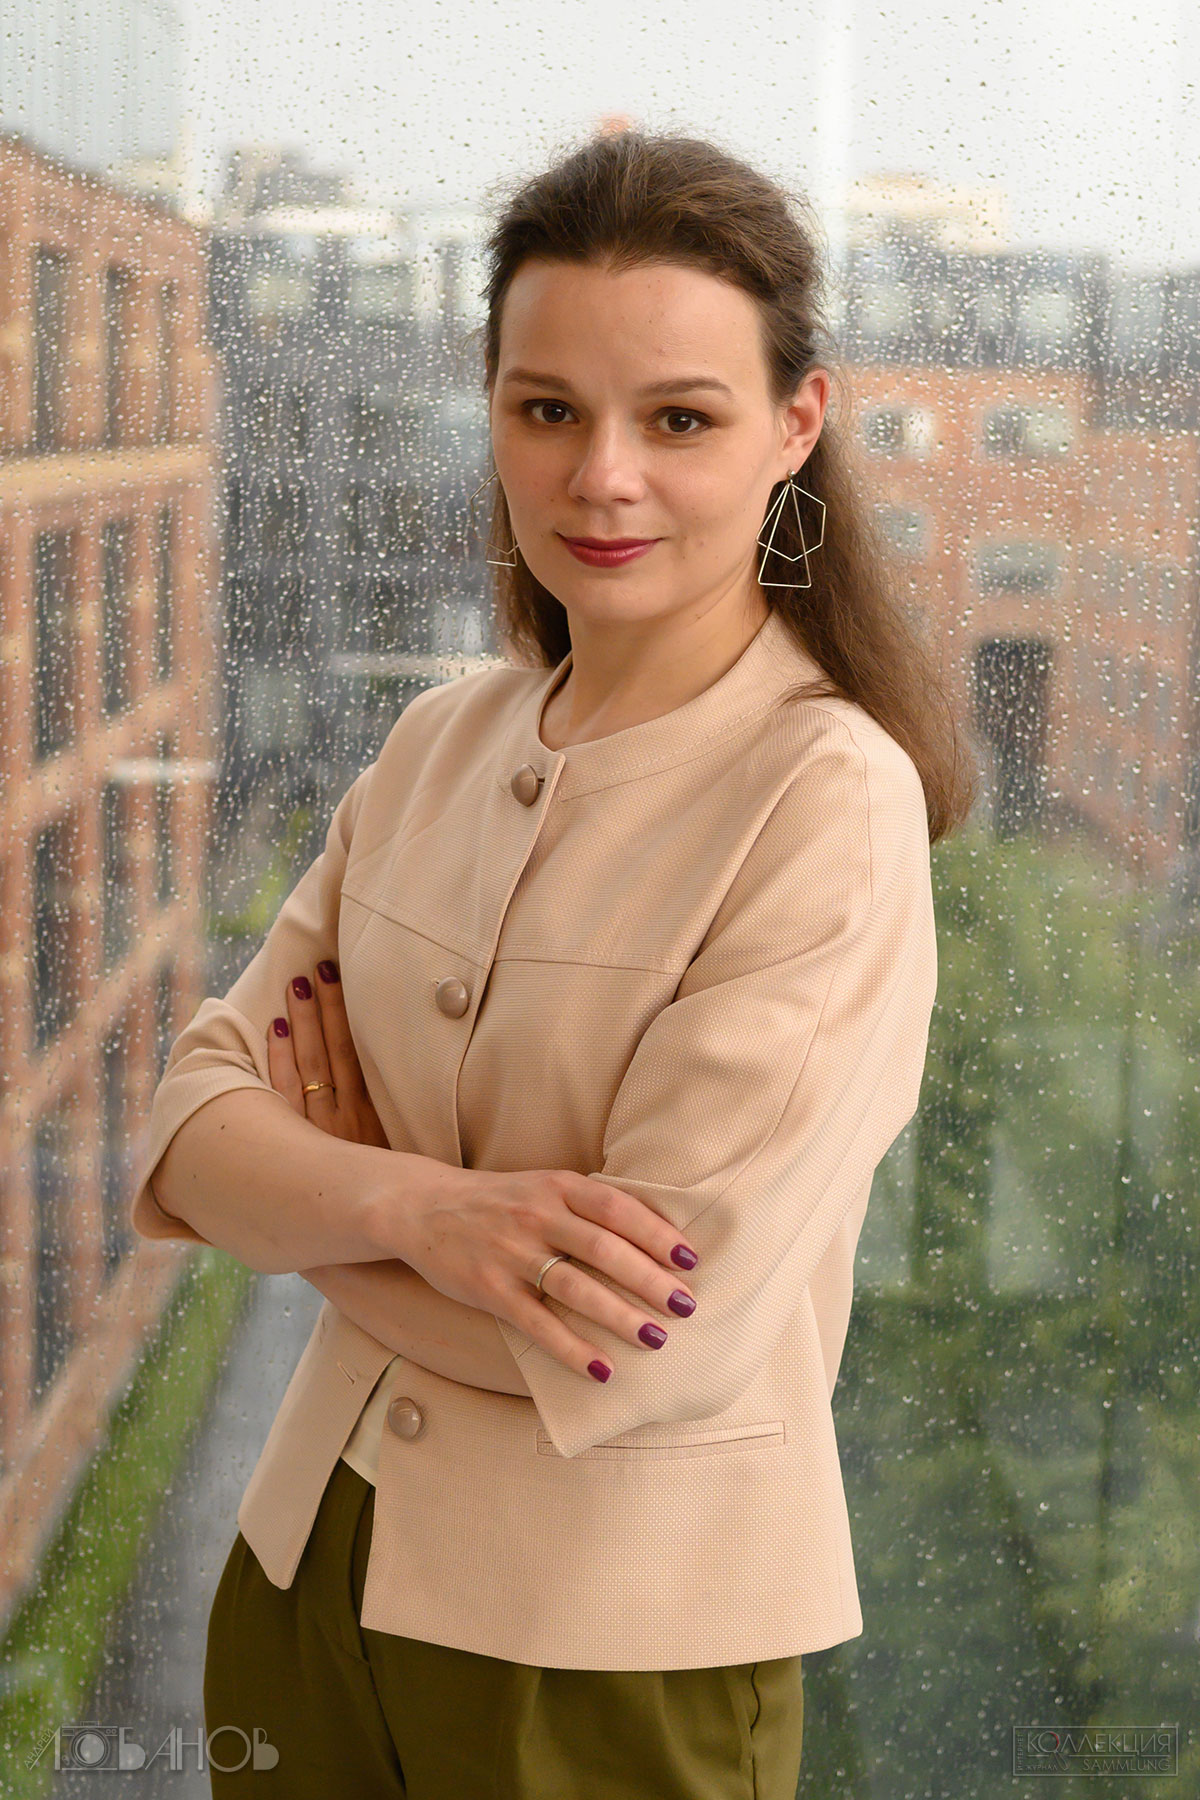 Юлия Петрова, директор Музея русского импрессионизма